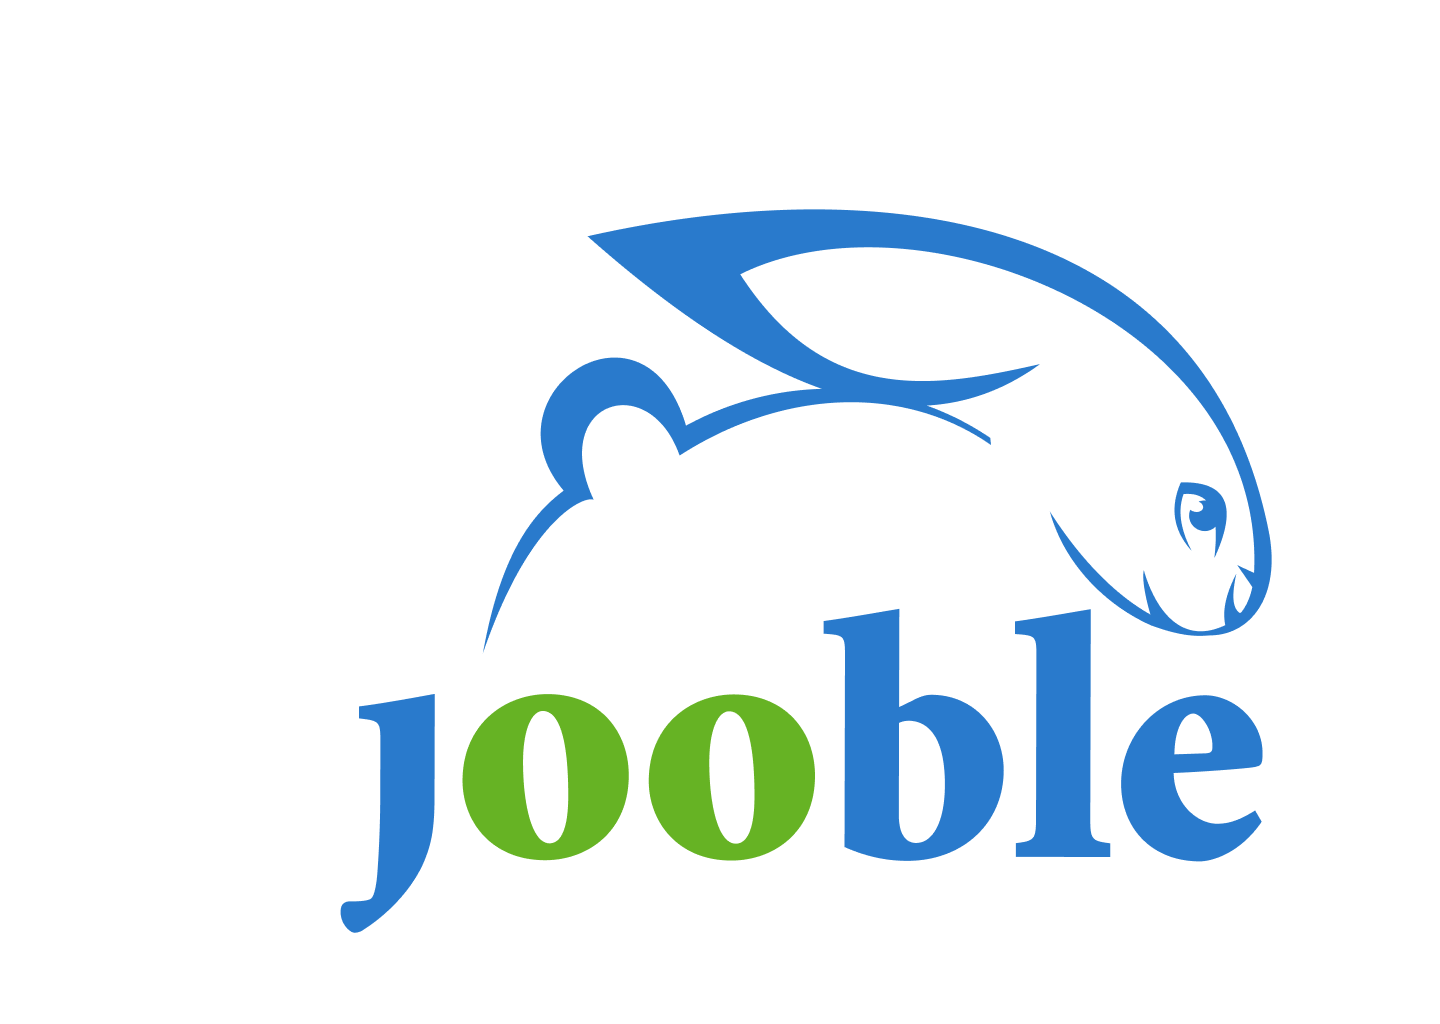 Jooble Logo